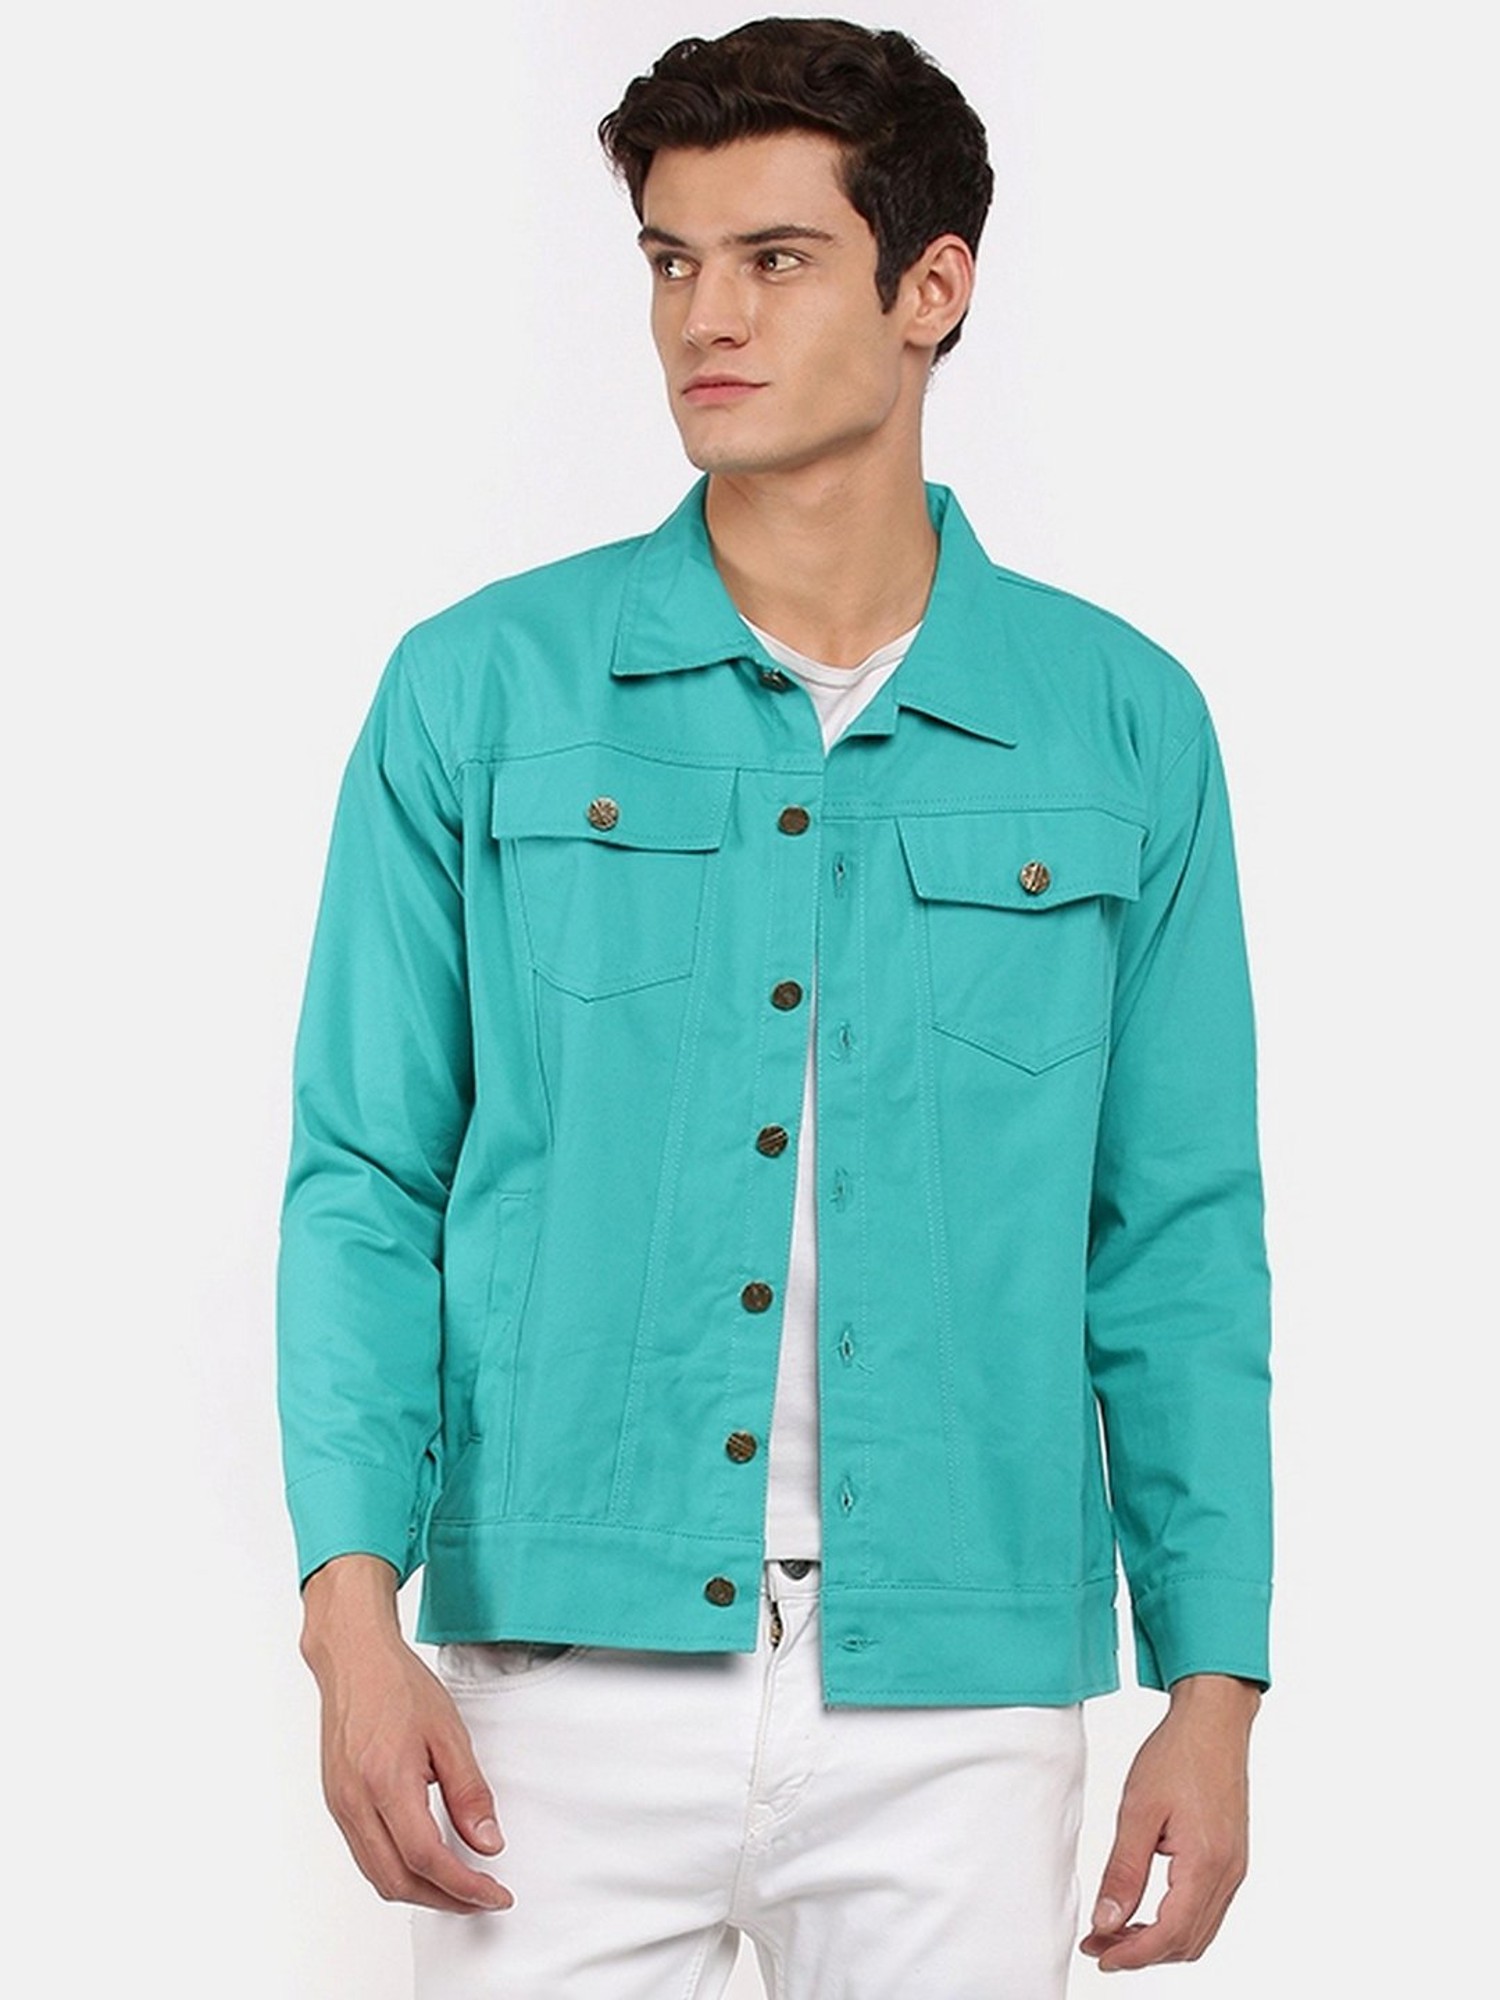 Aggregate 79+ turquoise denim jacket best